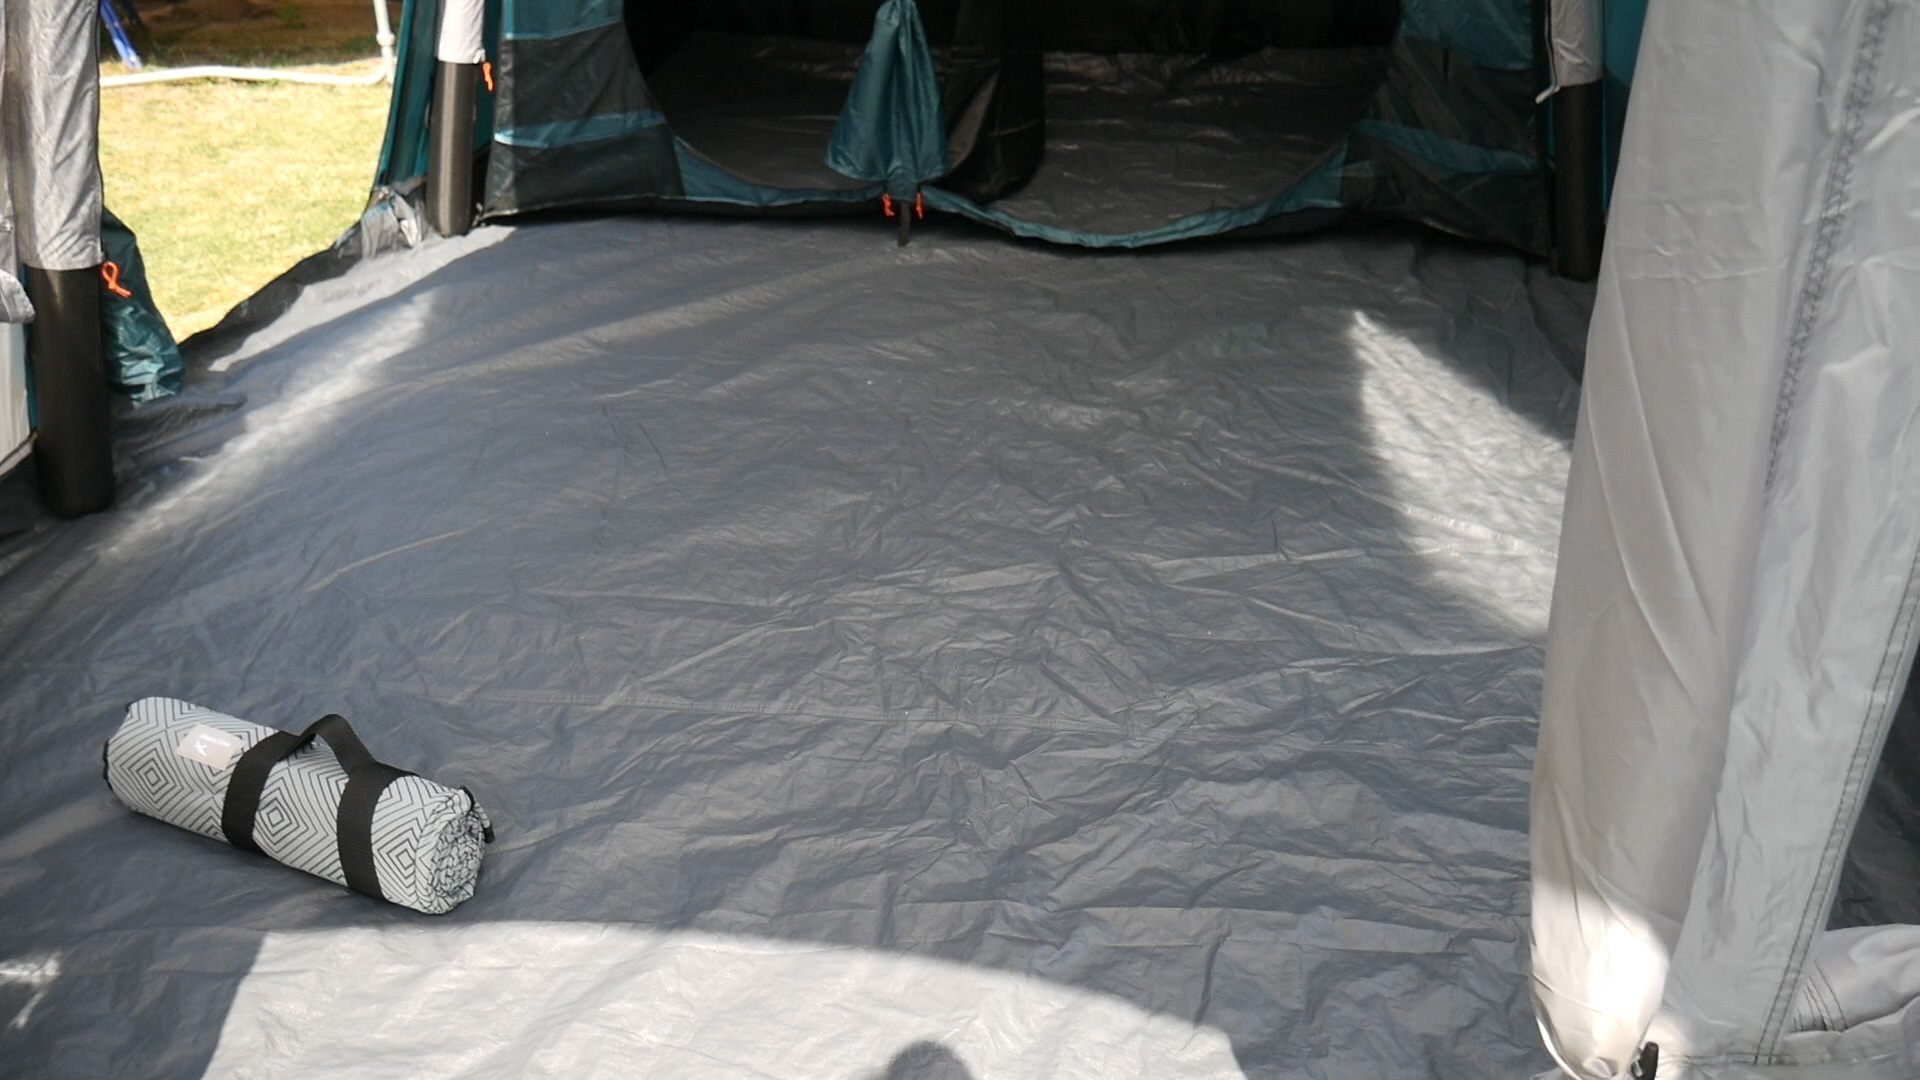 The Tent Carpet